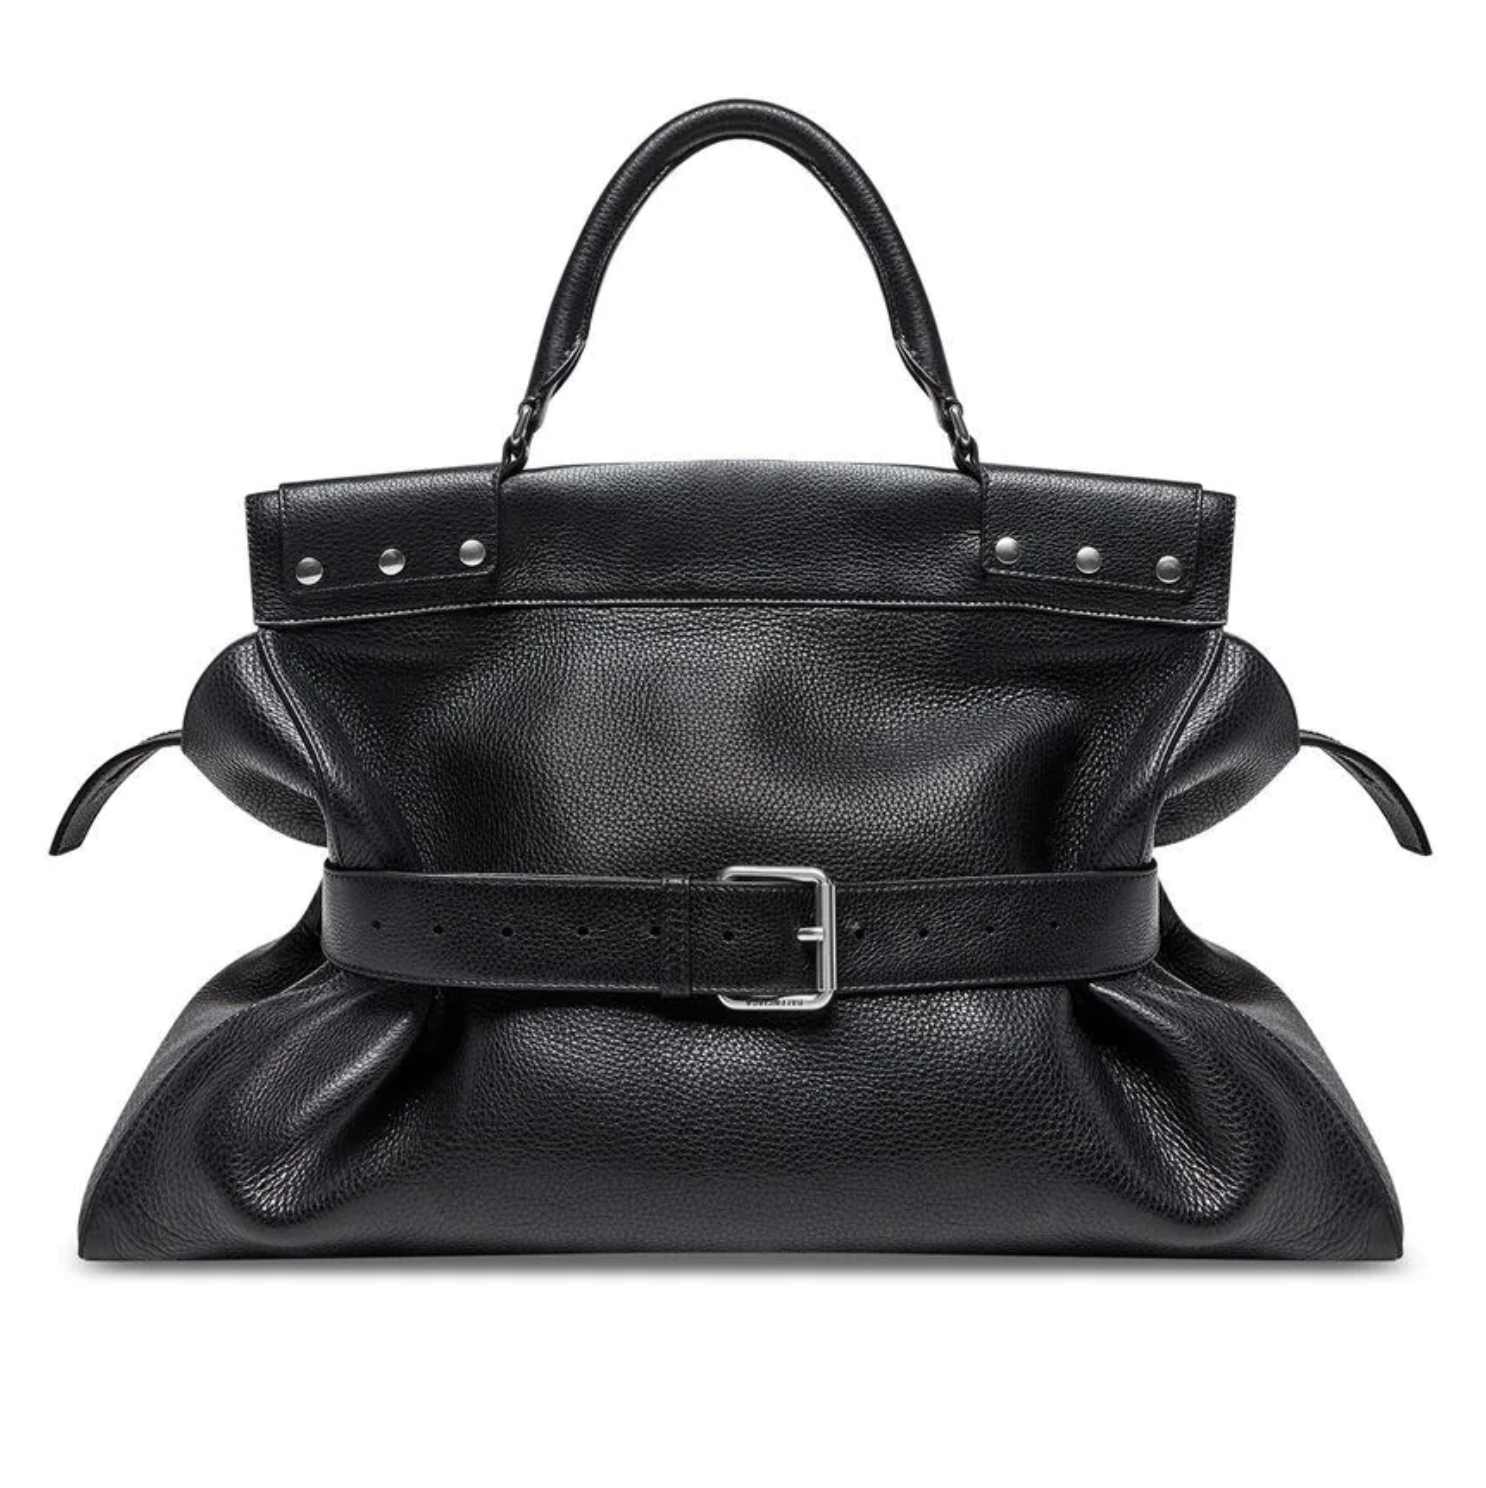 Luxury handbag - White leather tote bag Balenciaga